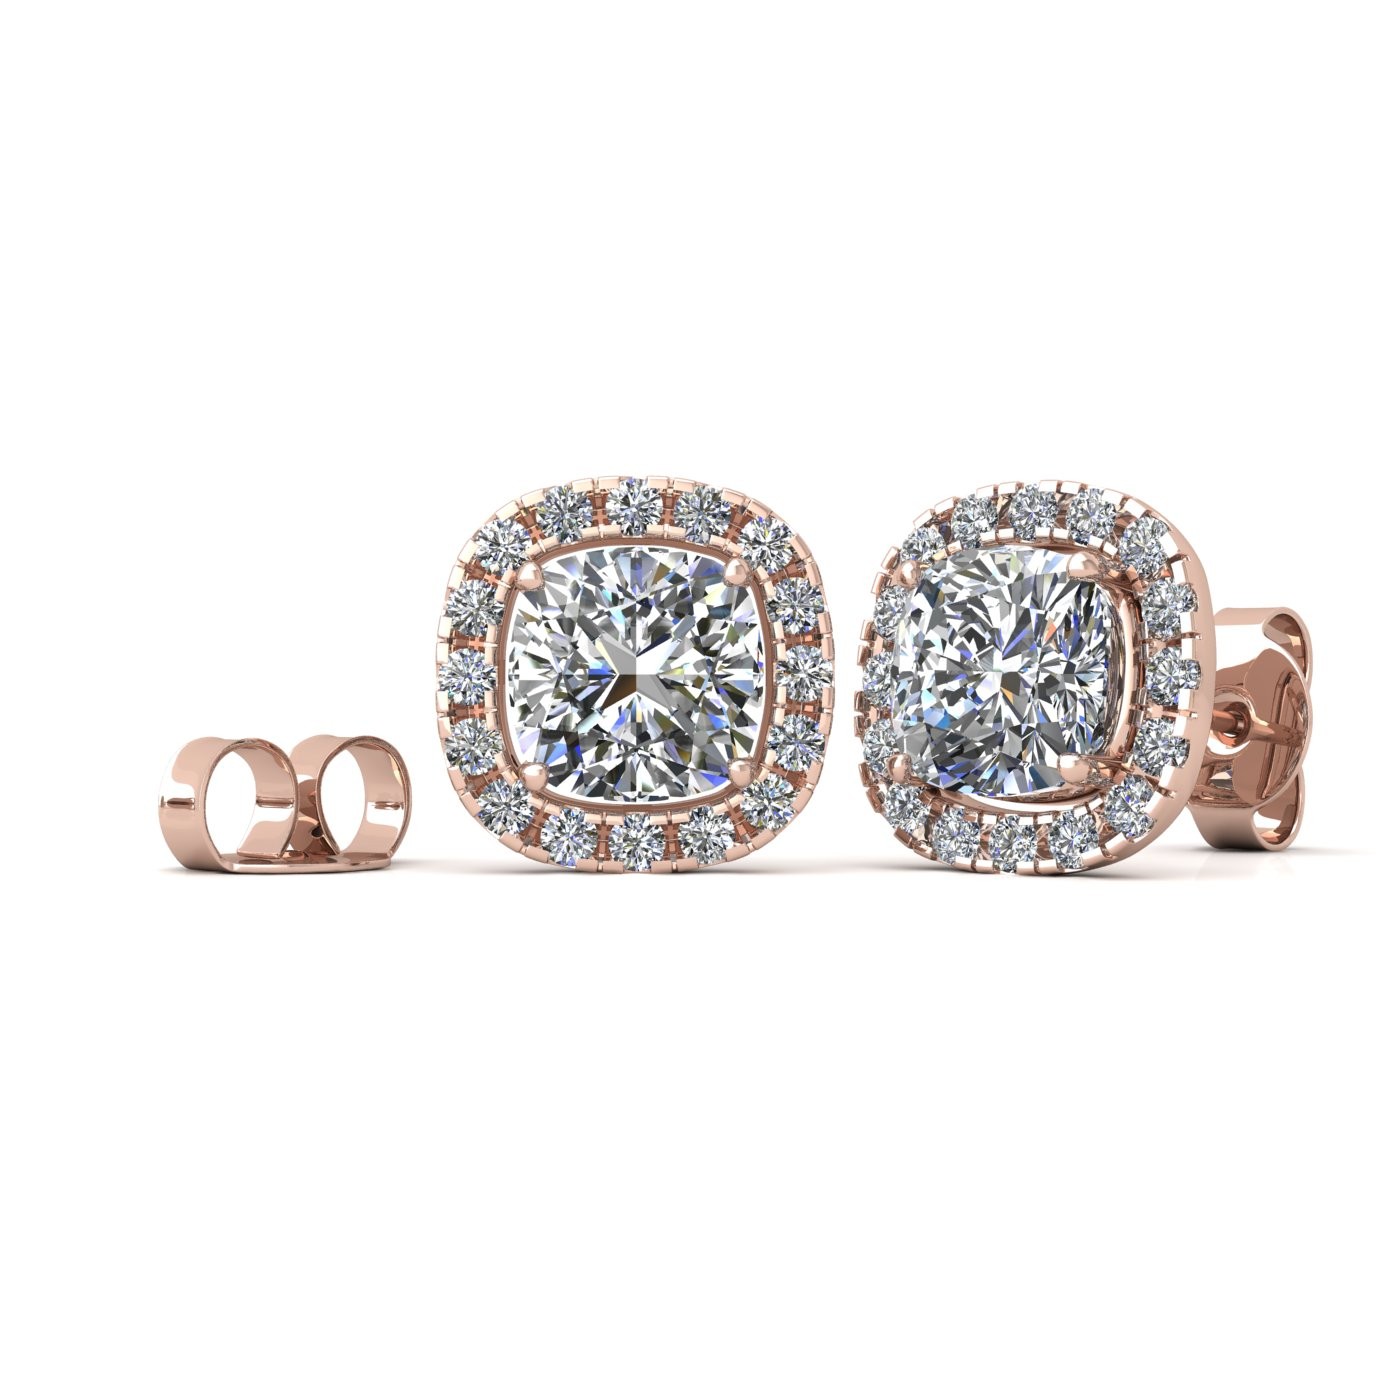 18k rose gold  0,5 ct each (1,0 tcw) 4 prongs cushion shape diamond earrings with diamond pavÉ set halo